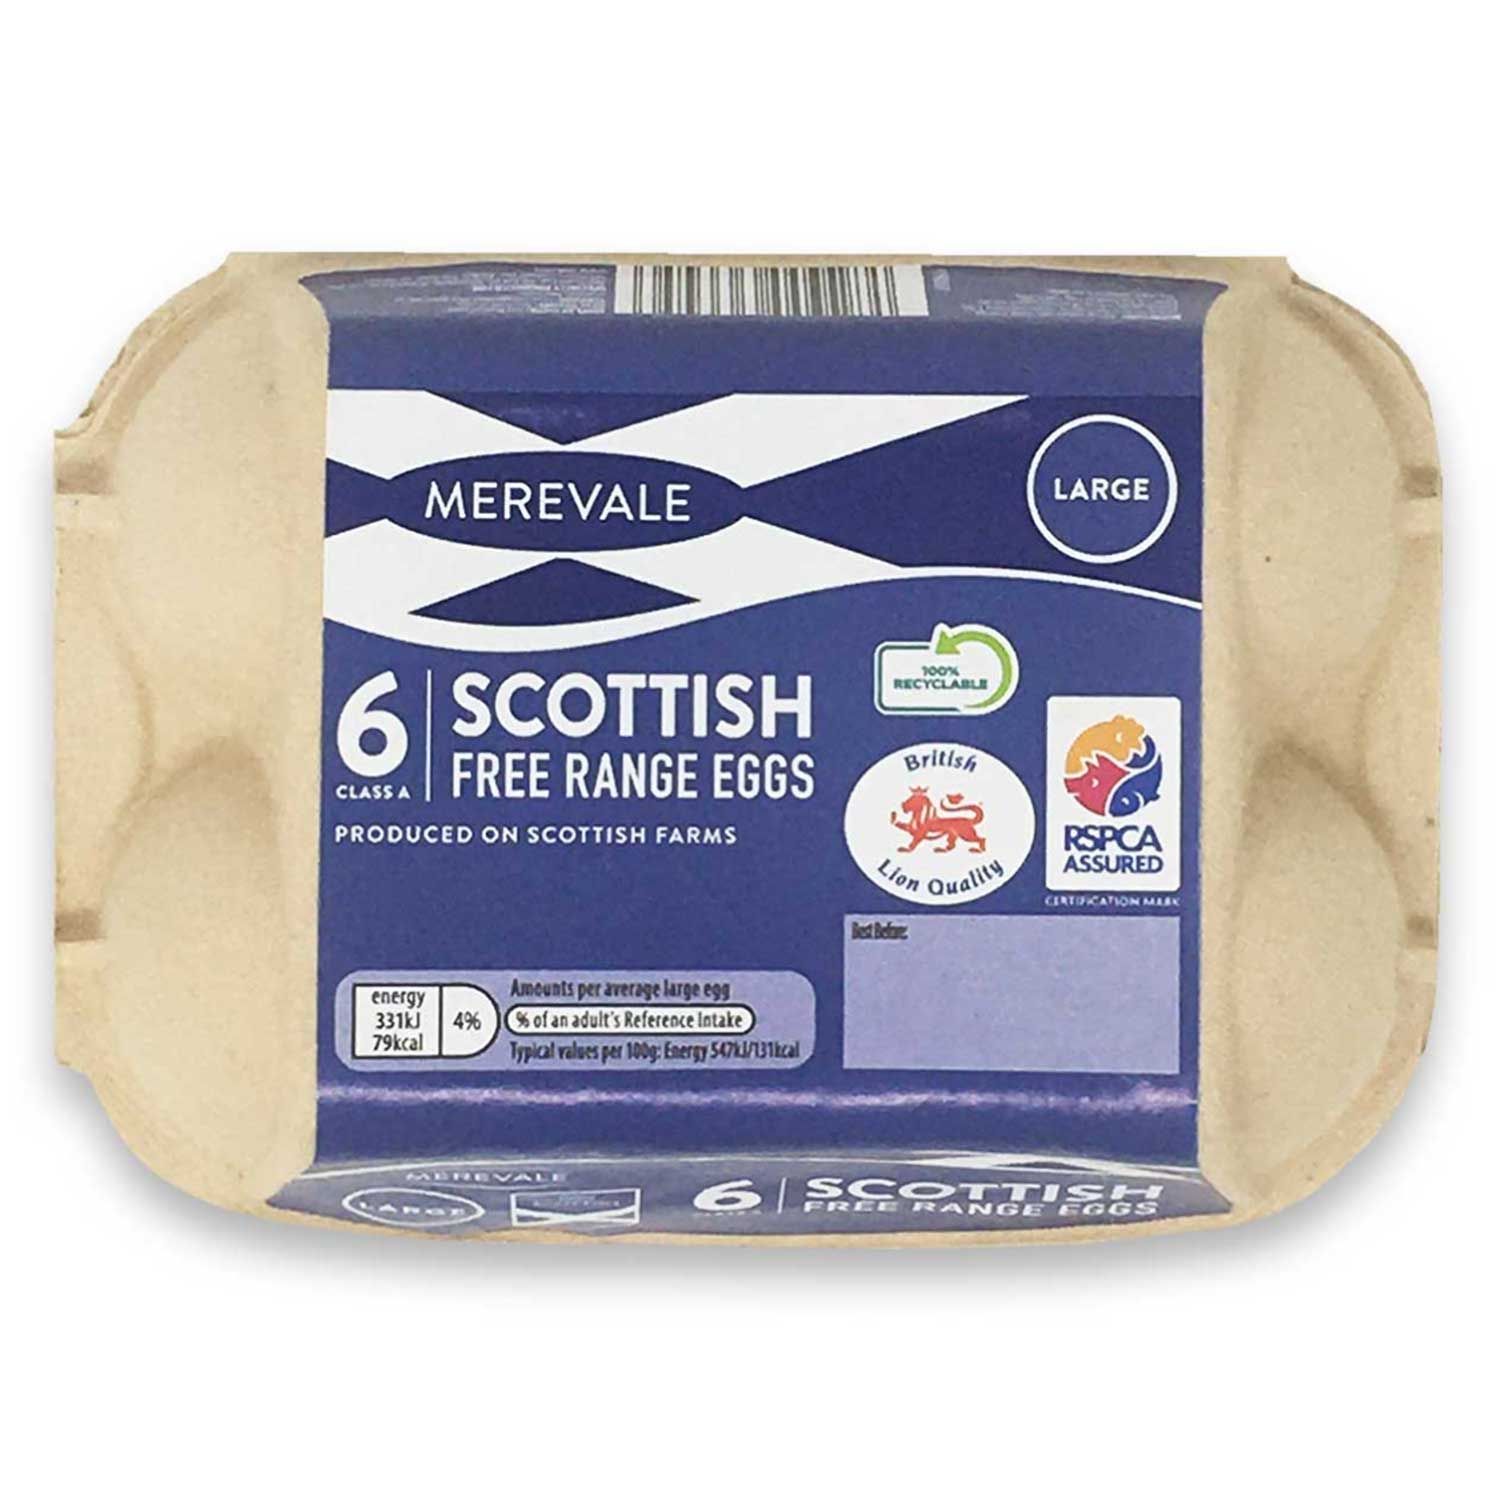 Merevale Large Scottish Free Range Eggs 6 Pack